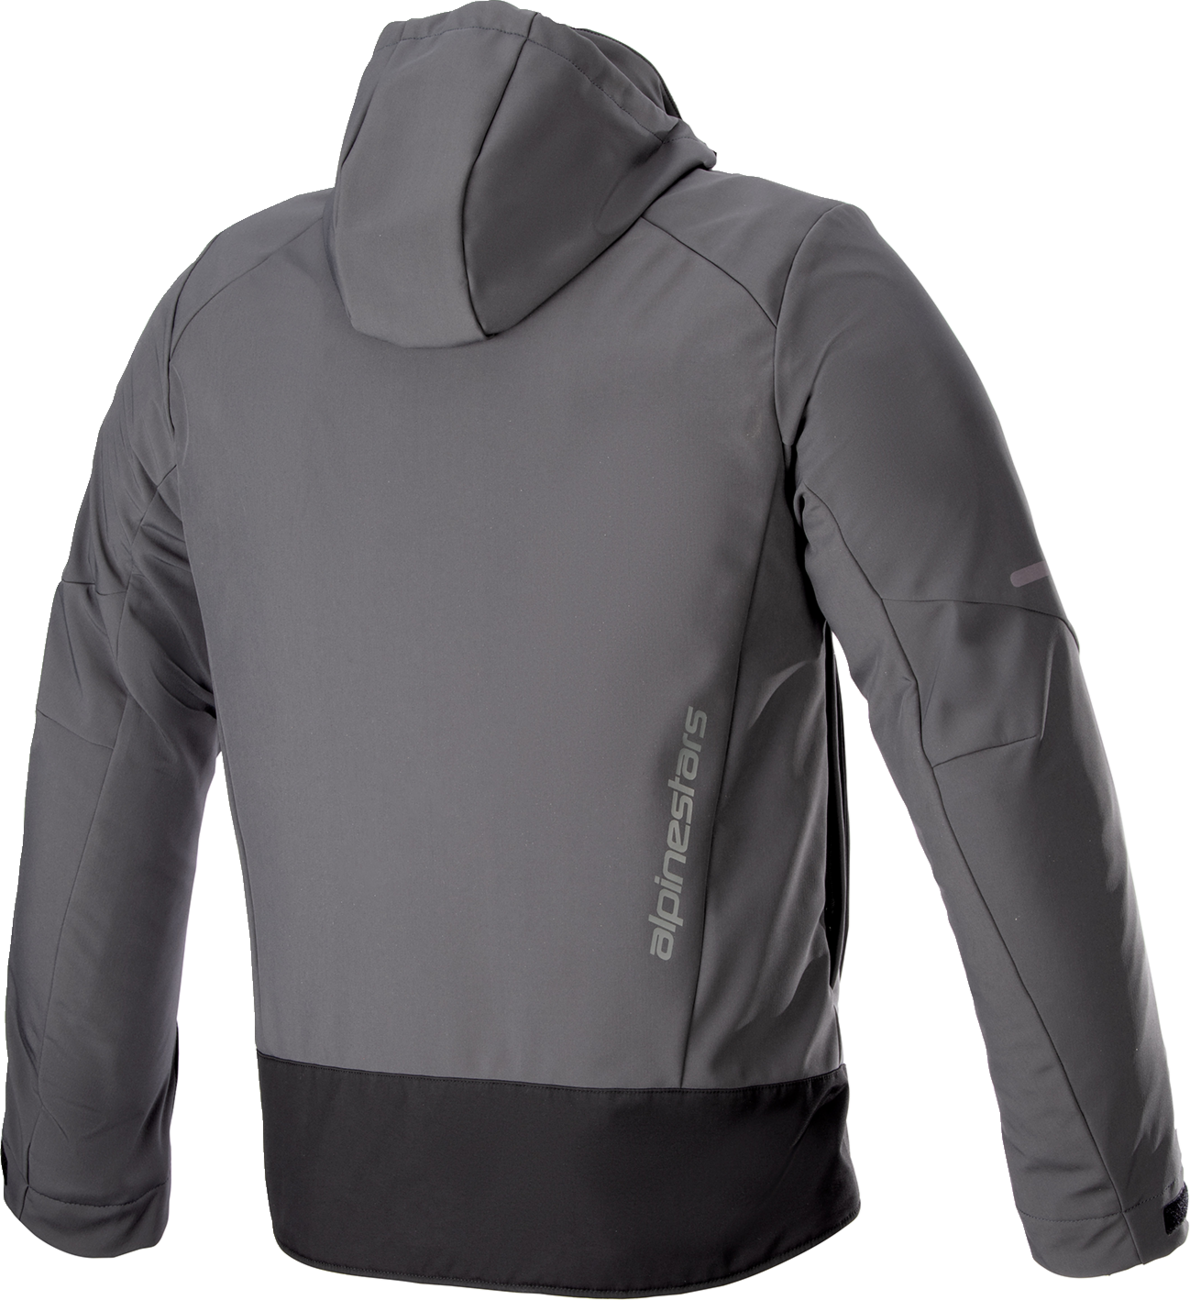 ALPINESTARS Neo Waterproof Jacket - Gray/Black - Medium 4208023-9610-M